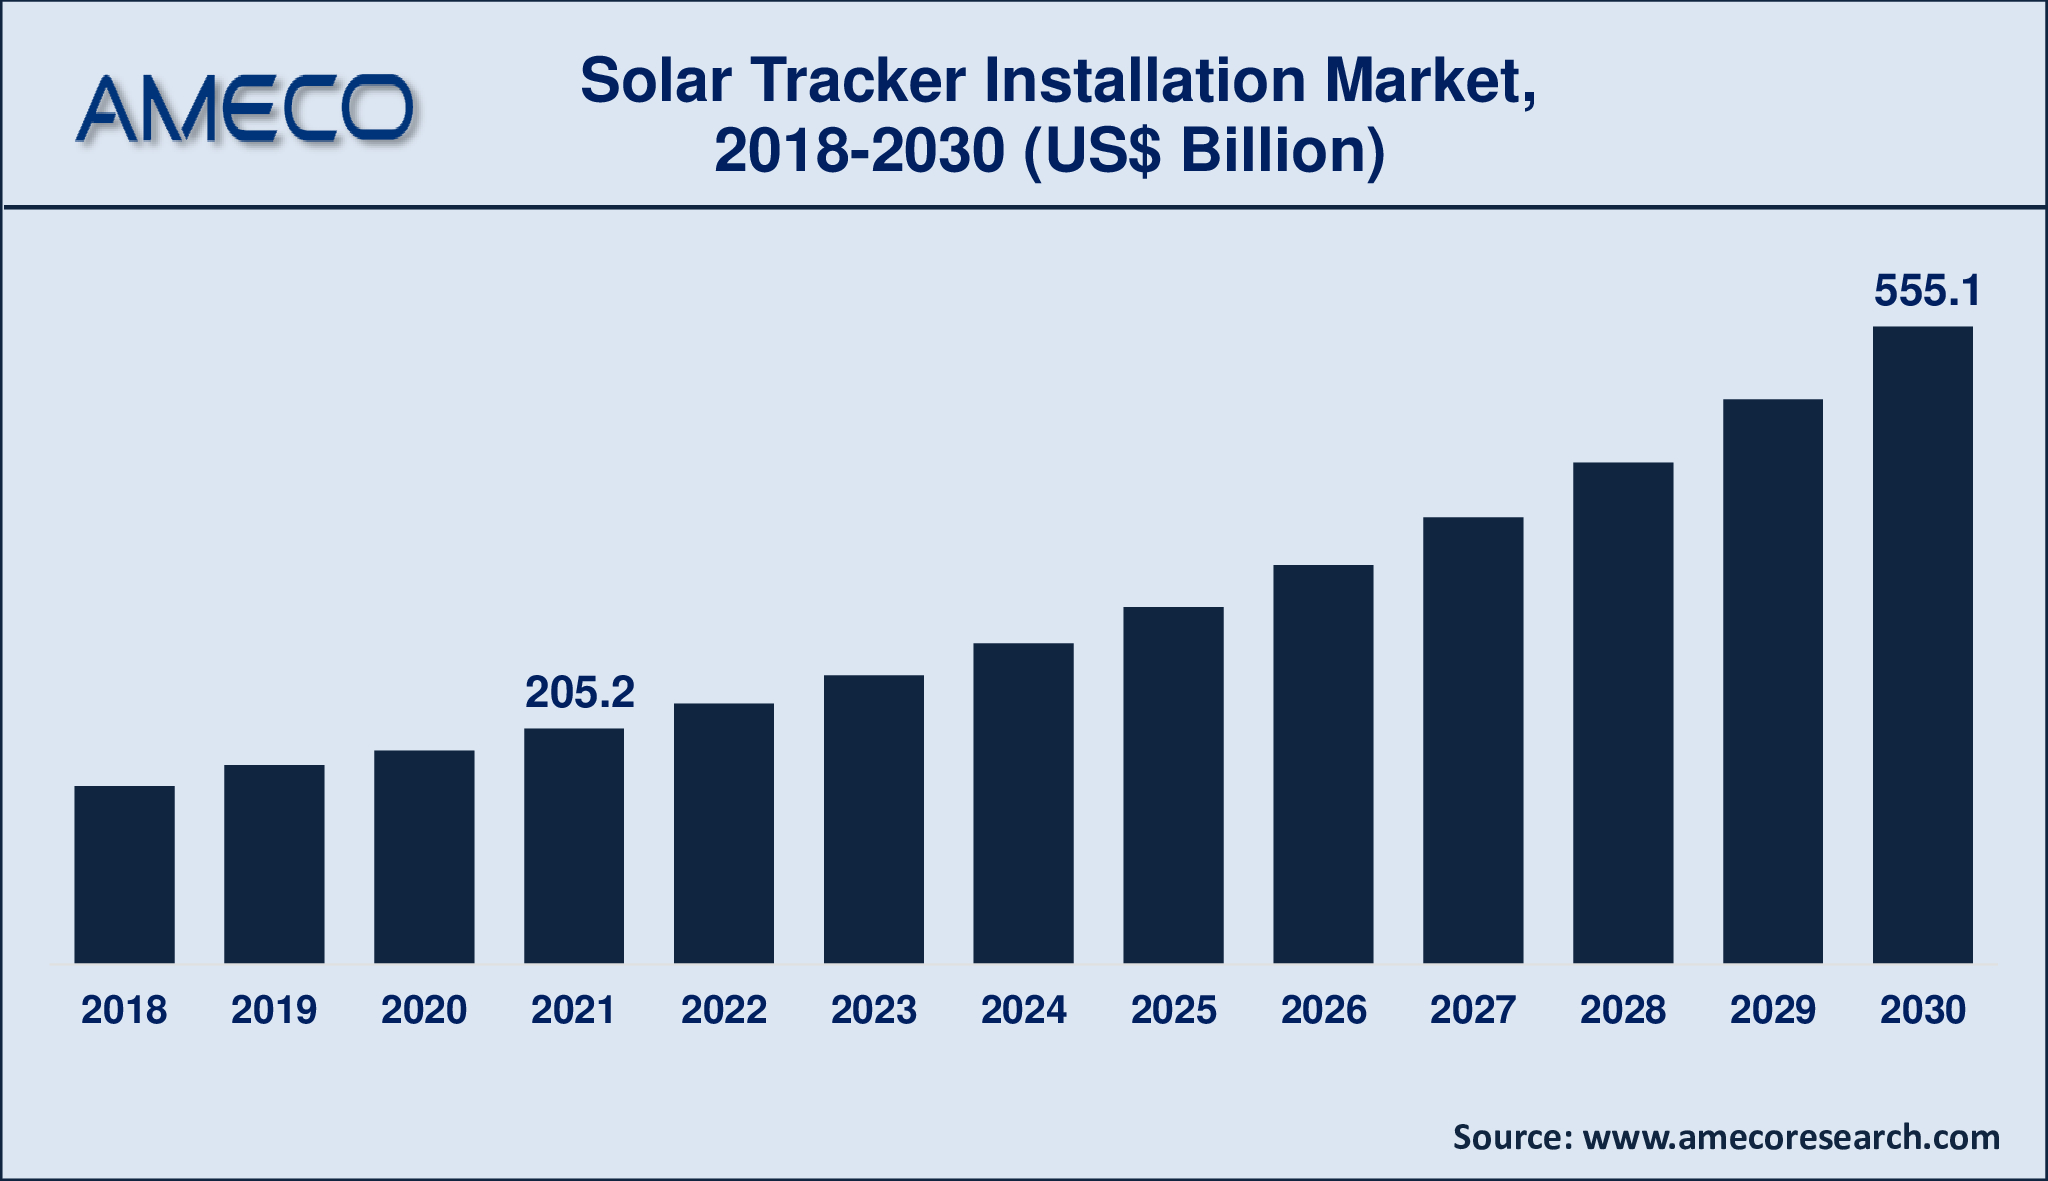 Solar Tracker Installation Market Analysis Period